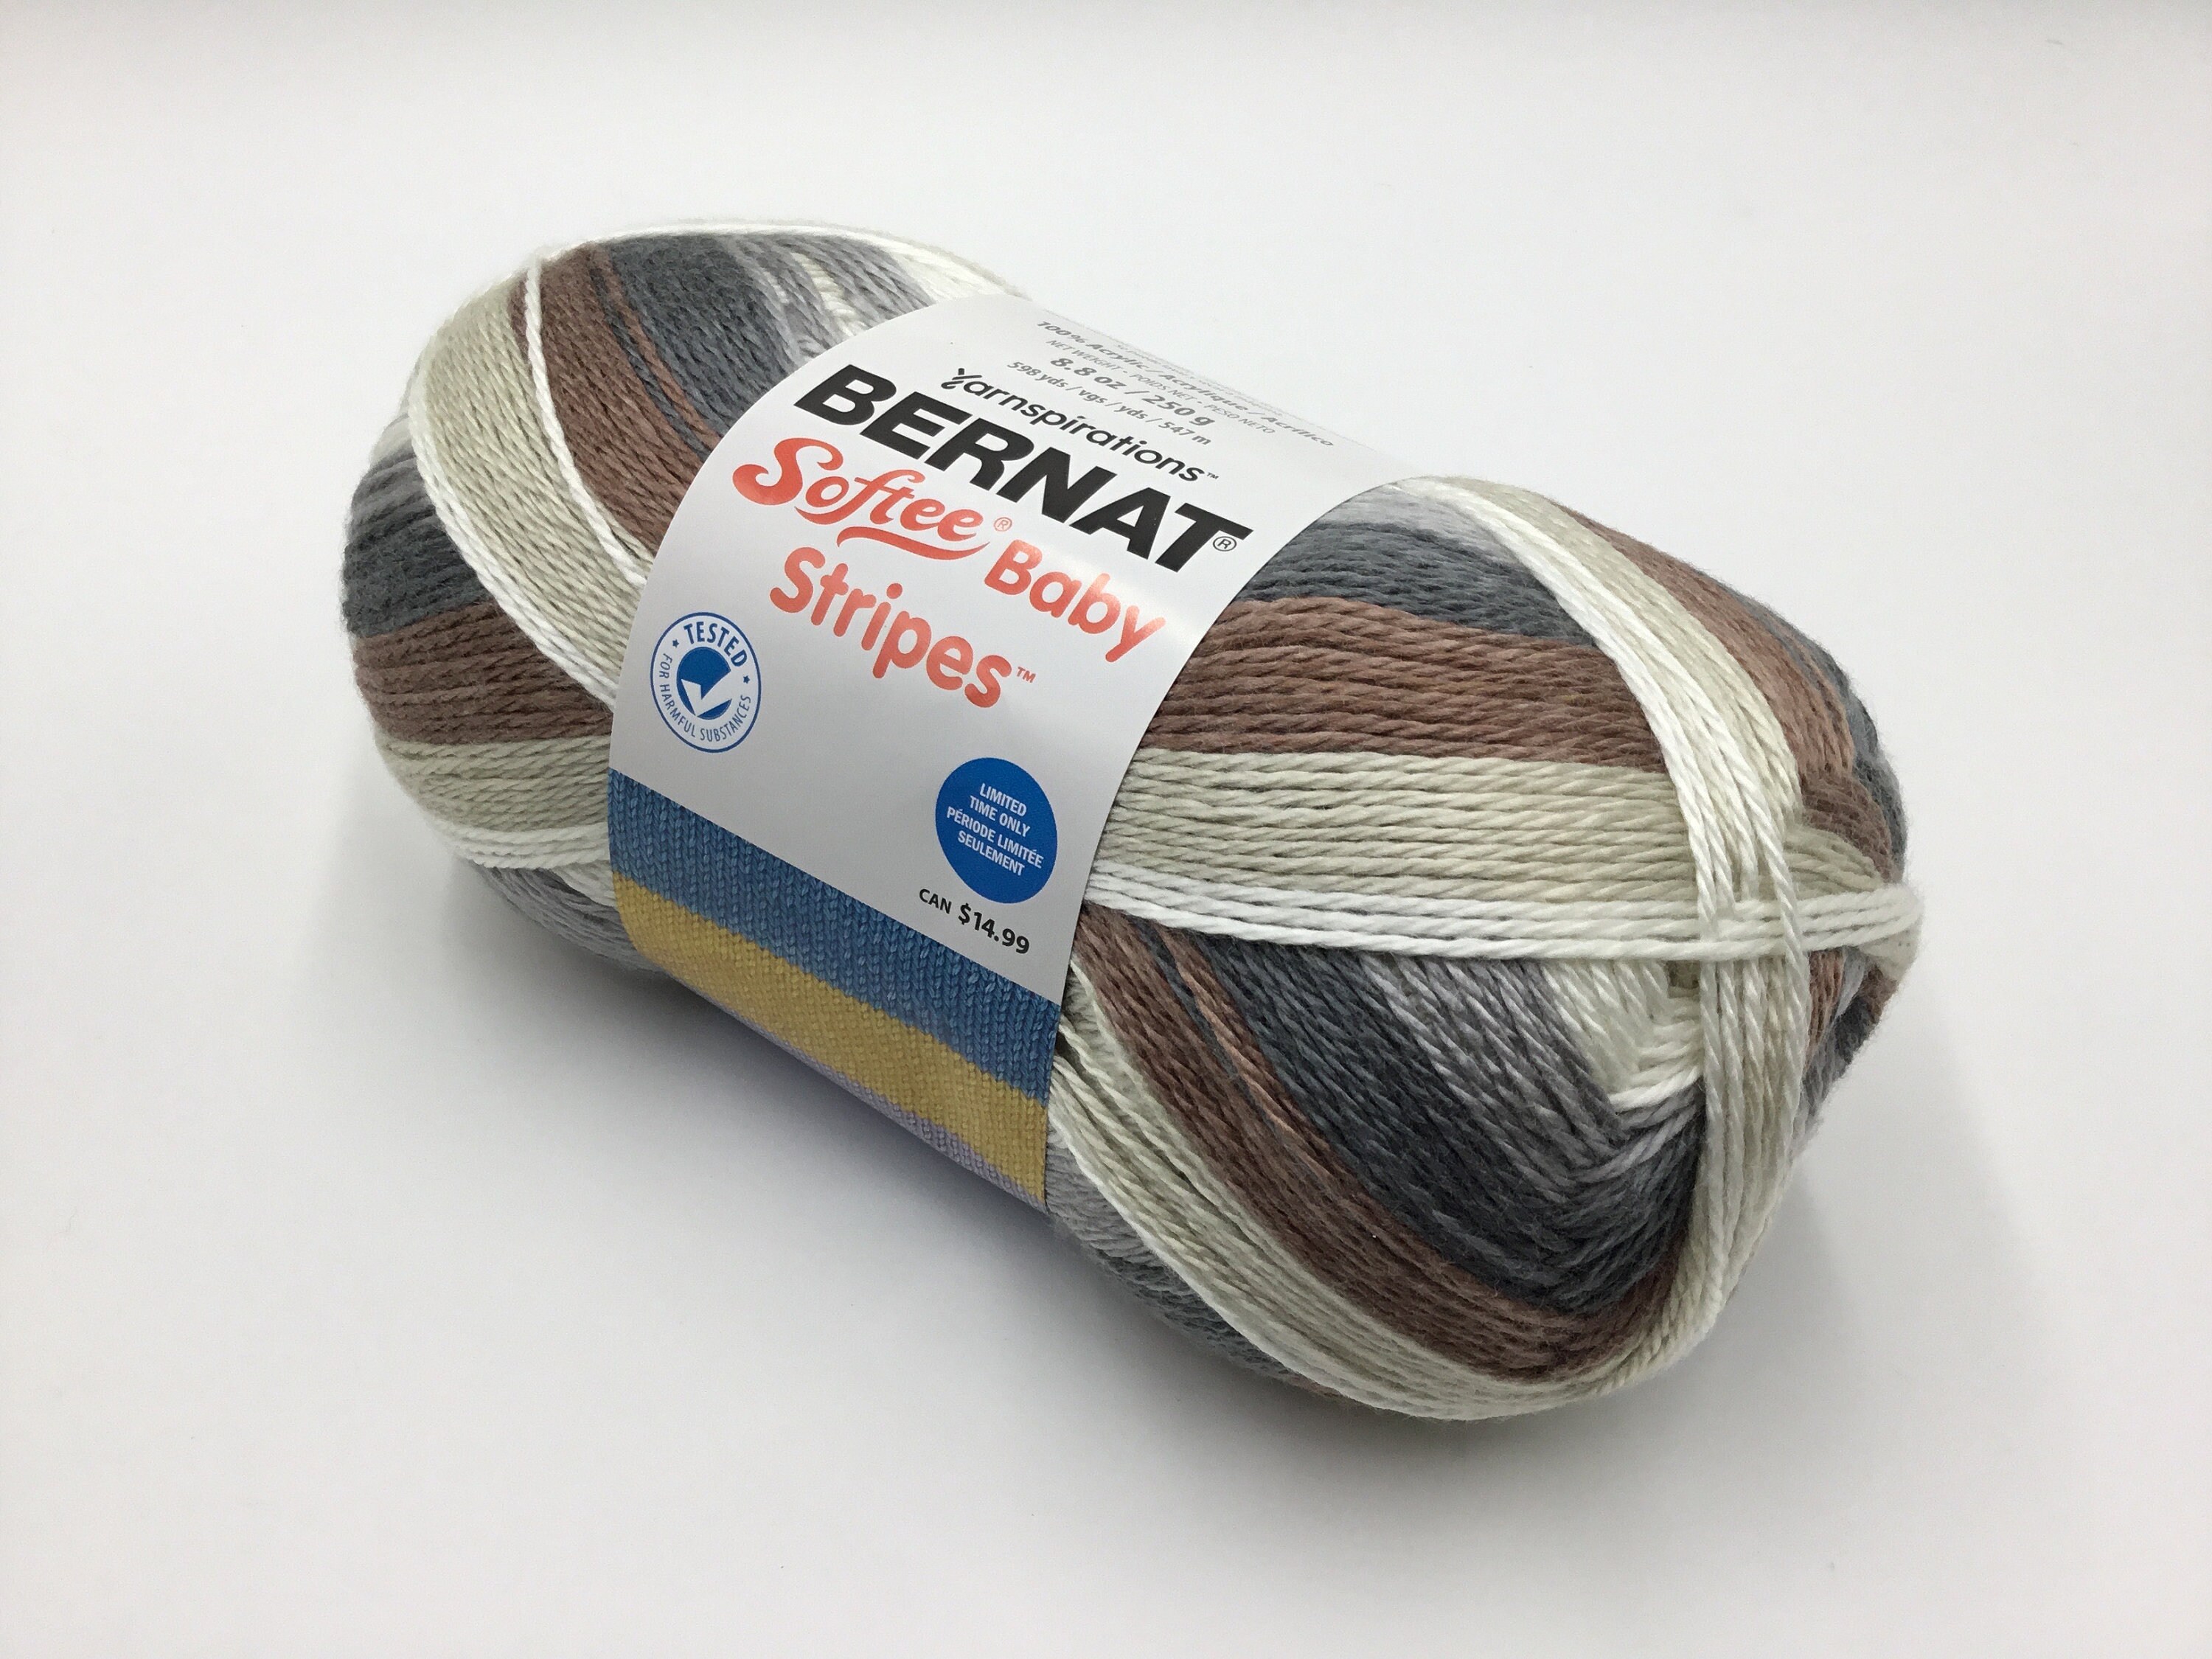 Bernat Softee Baby Stripes Yarn (250g/8.8oz)